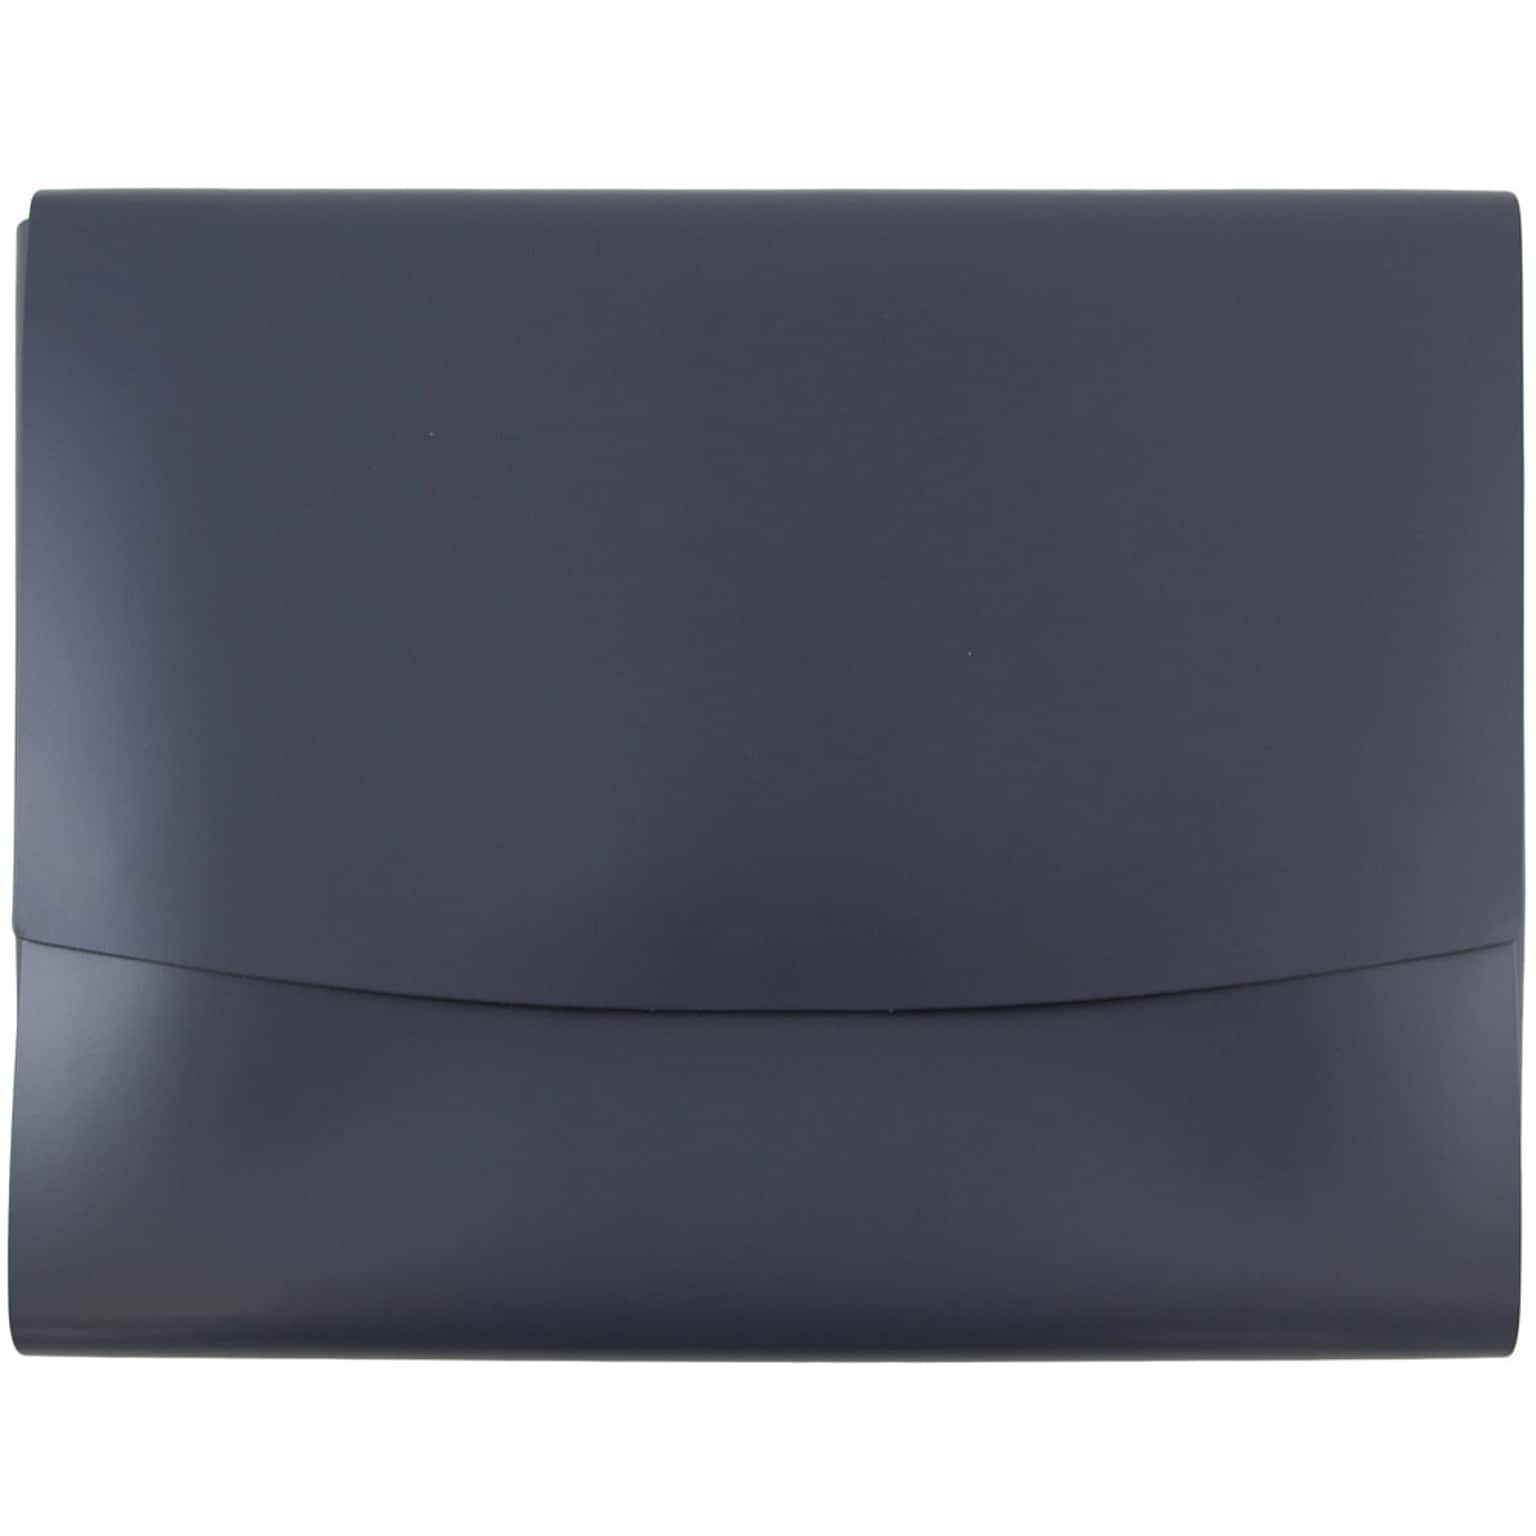 JAM Paper Leather Portfolio Case with Snap Closure, Blue, 12/Carton (2233320840B)